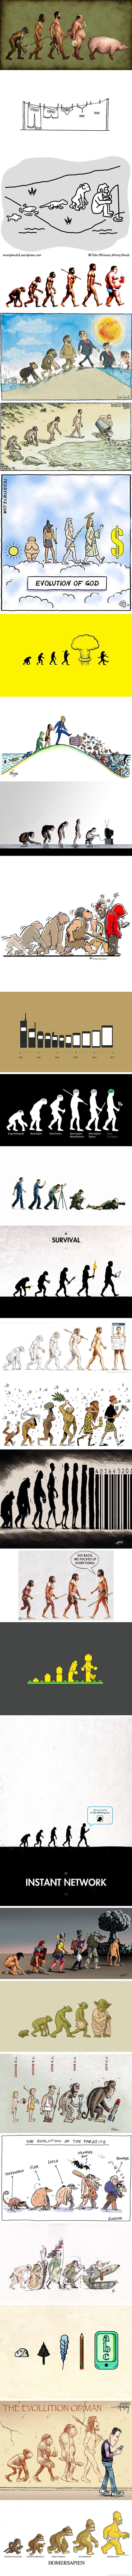 Satirical evolution comics